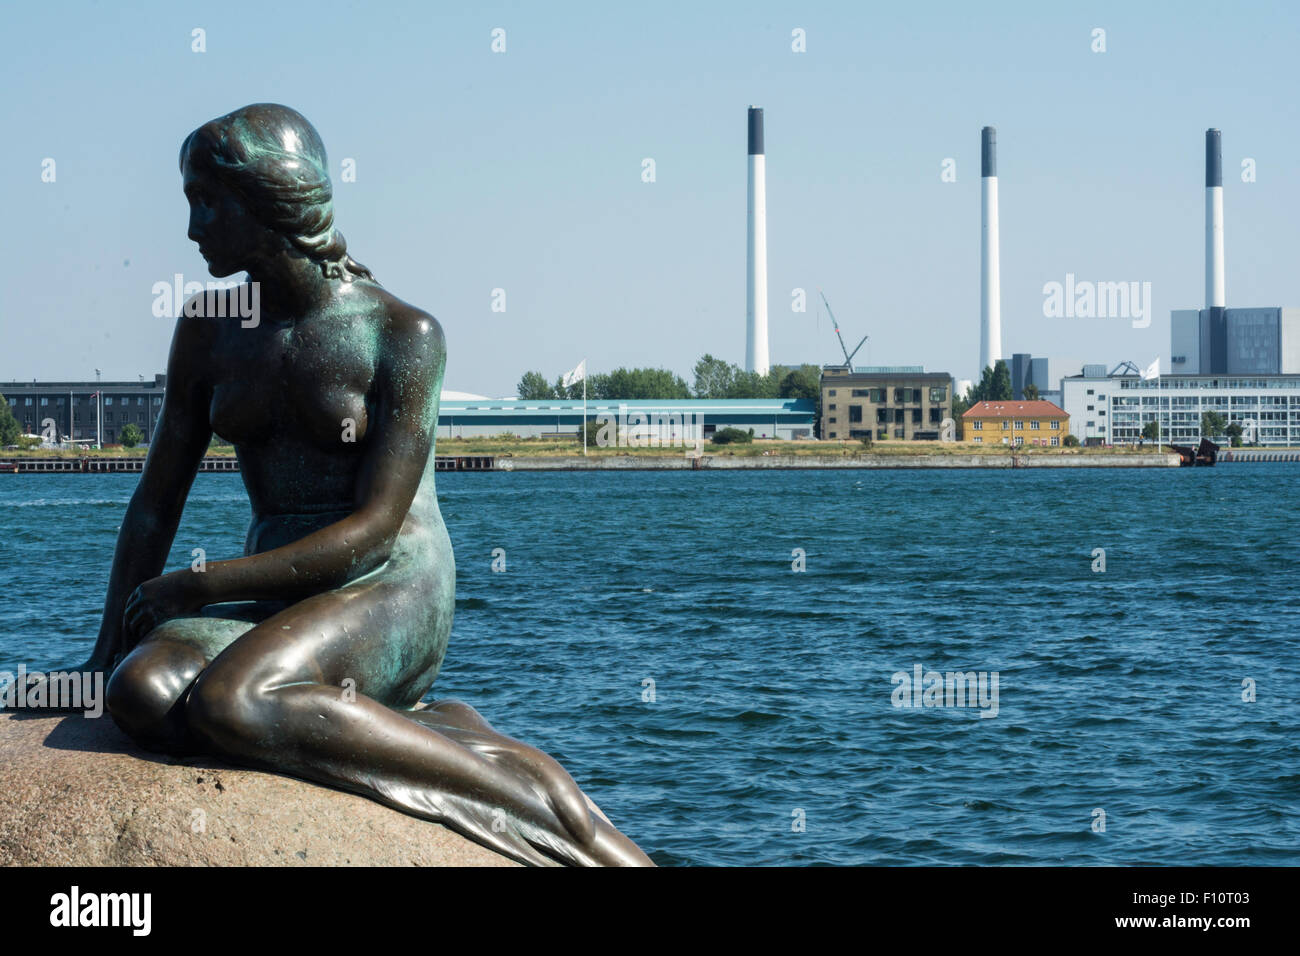 The Little Mermaid statue, Copenhagen, Denmark Stock Photo - Alamy